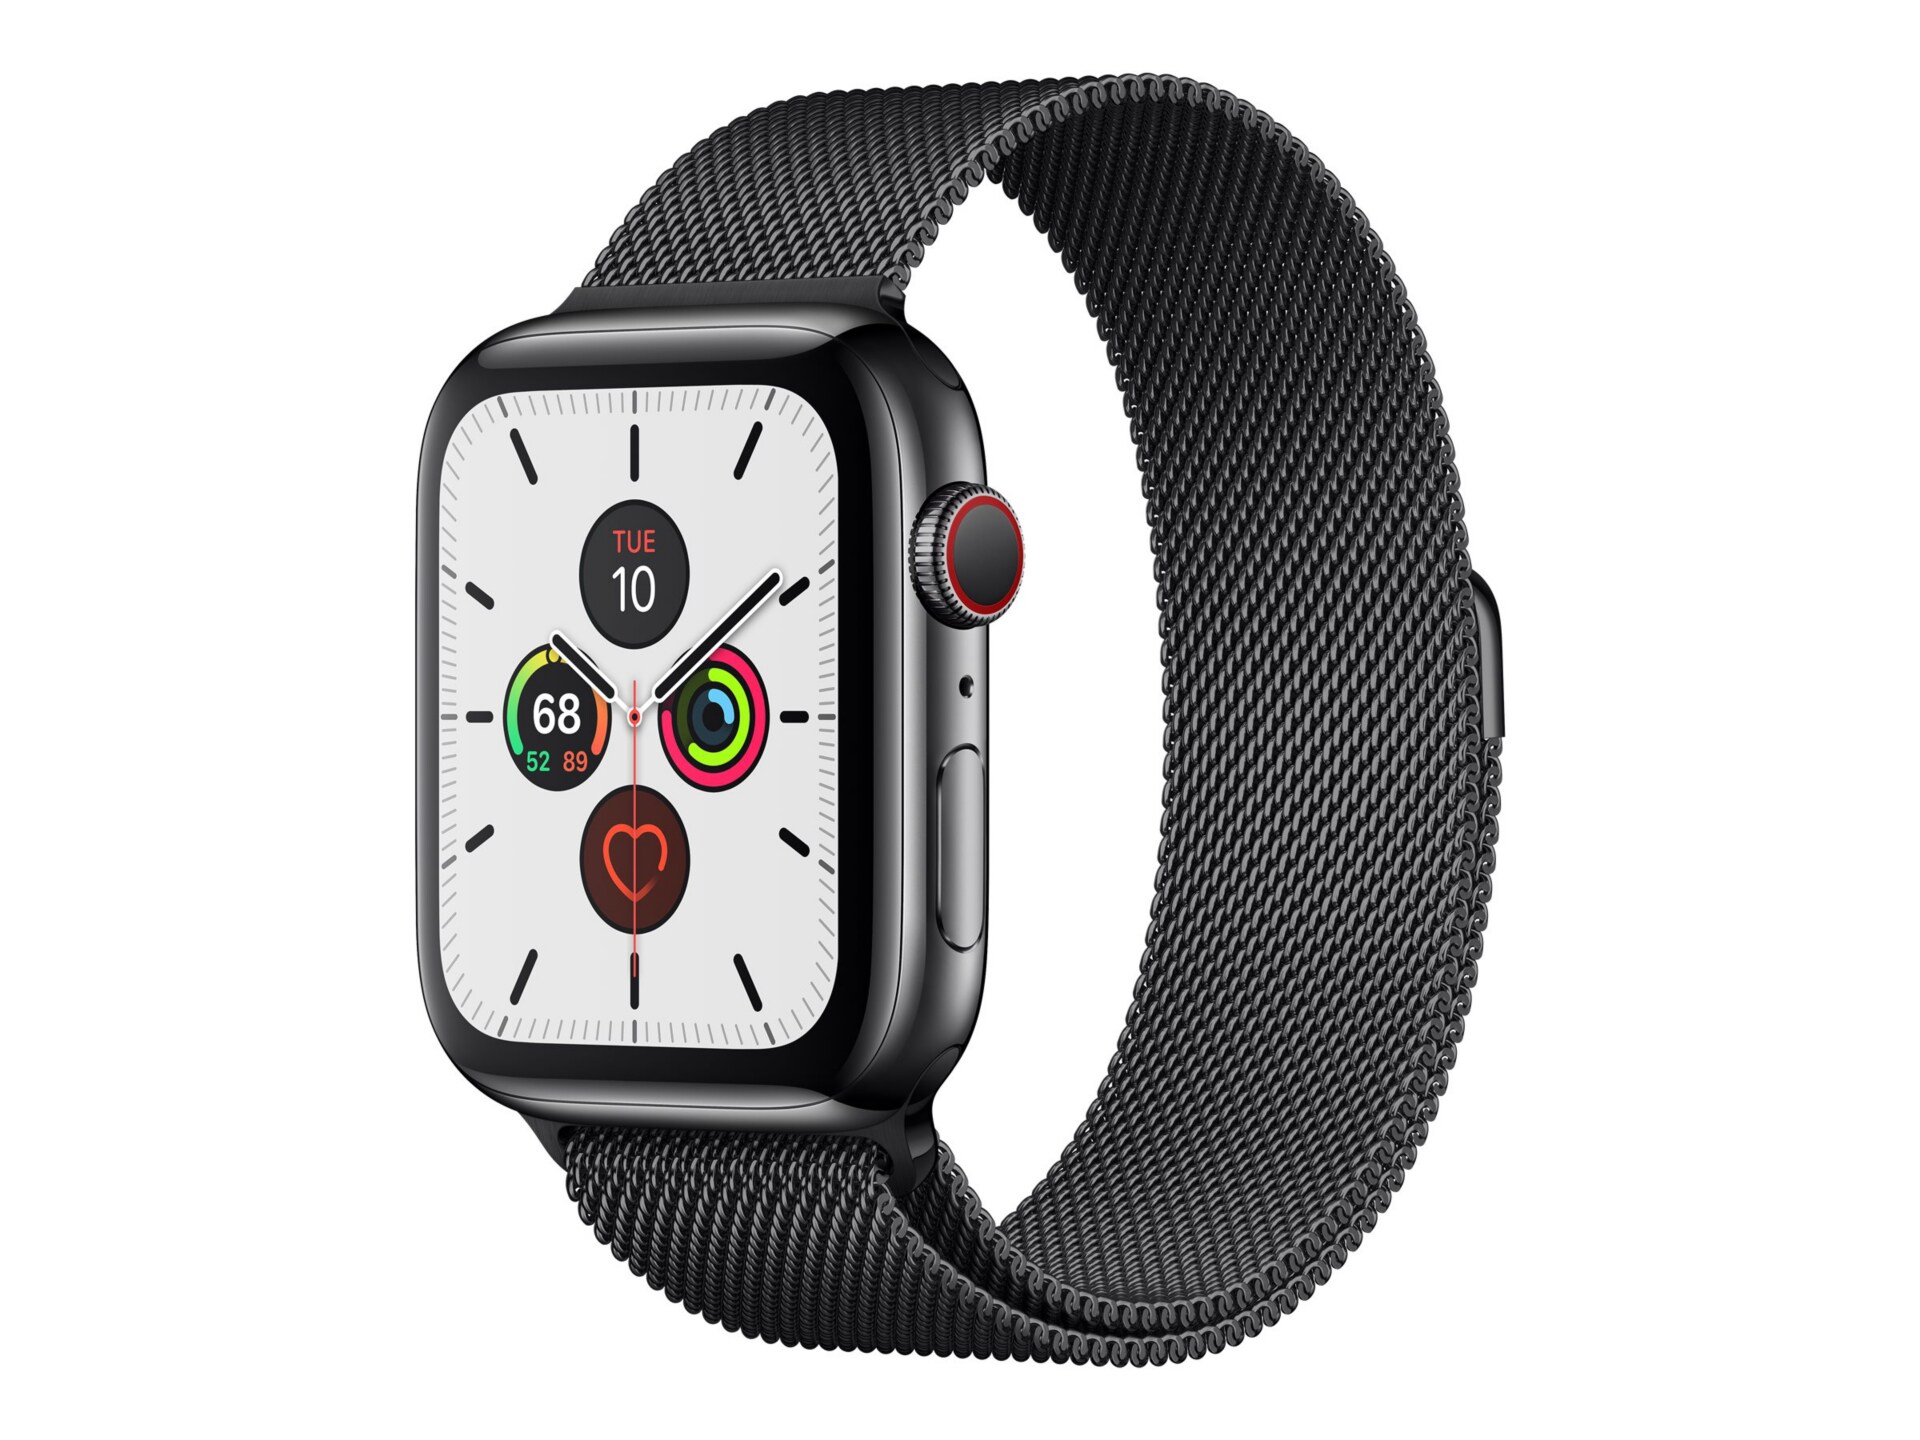 Apple Watch Series 5 (GPS + Cellular) - space black stainless steel - smart